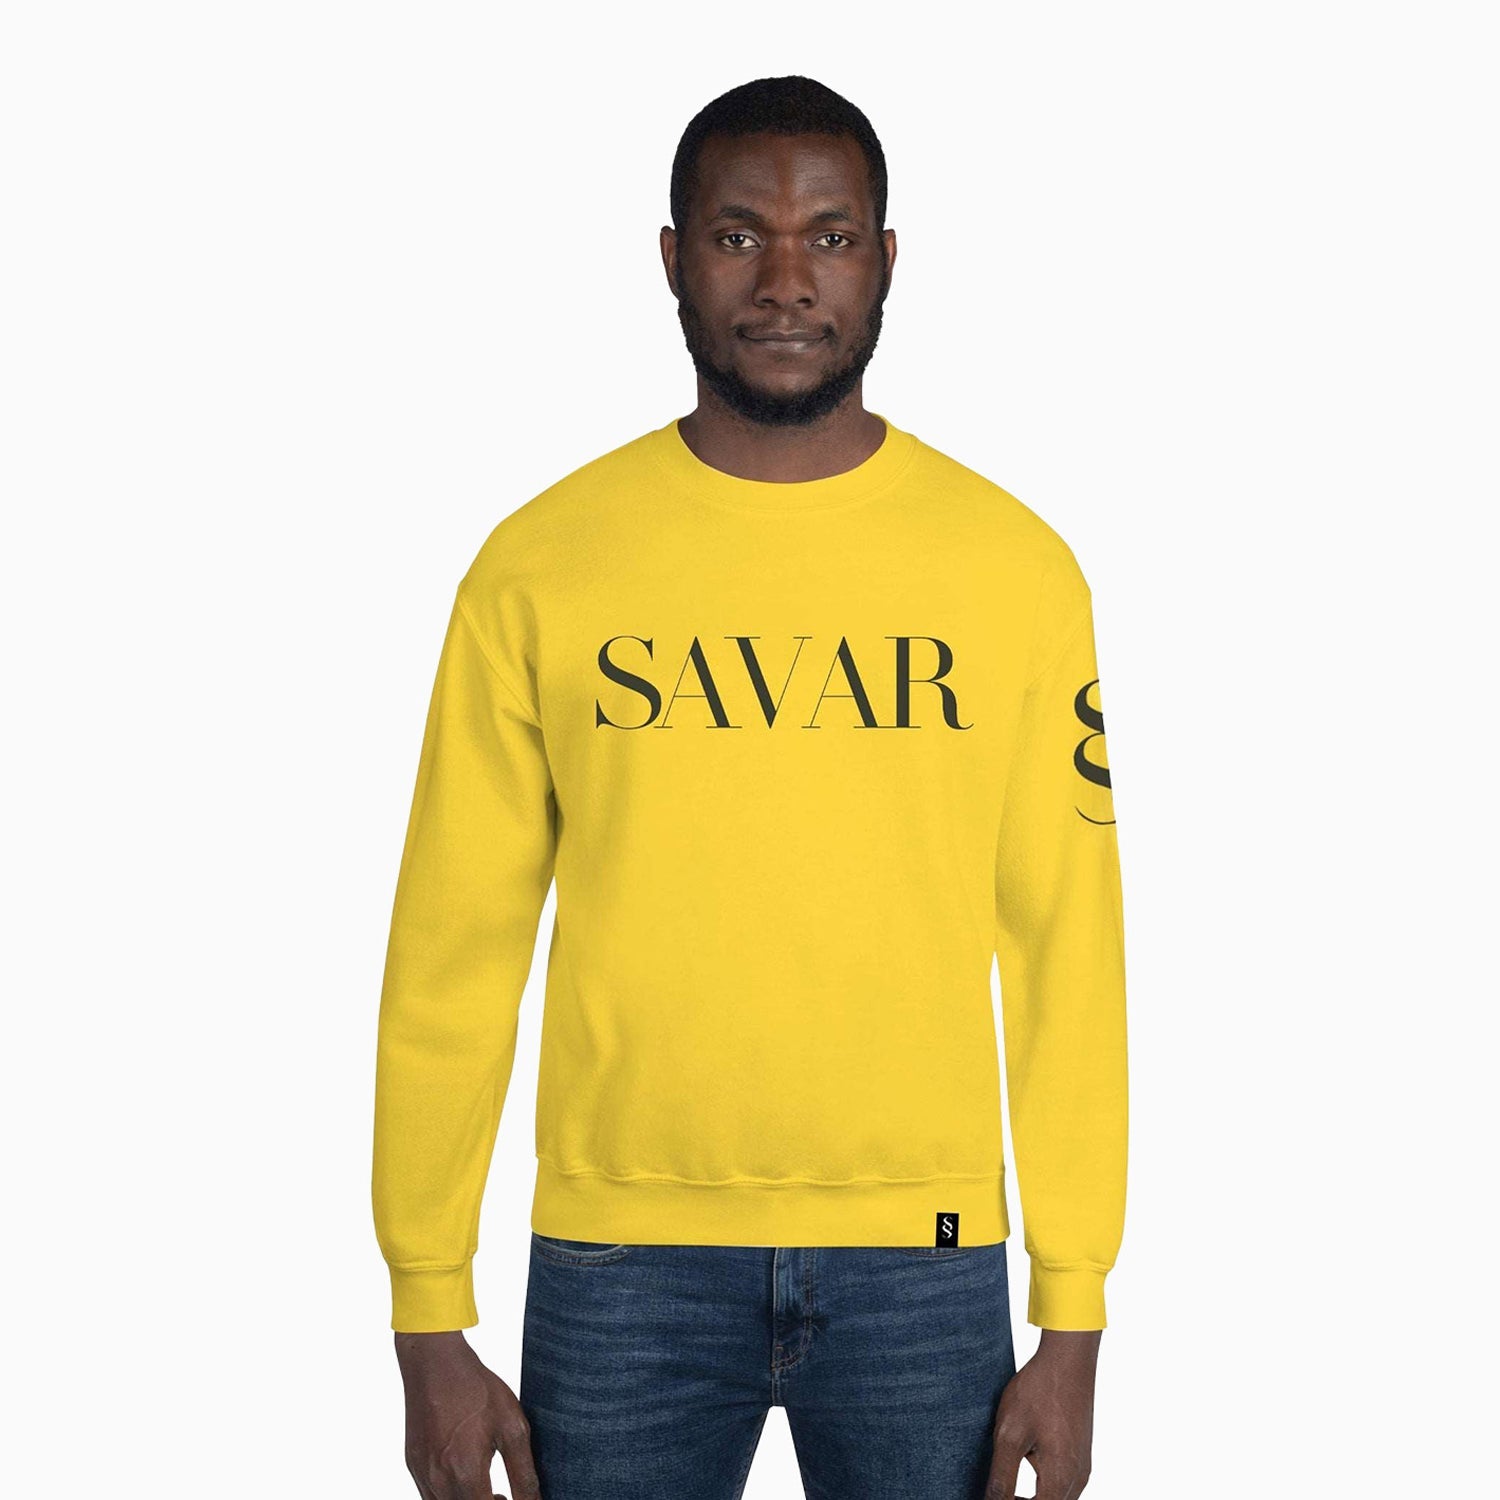 basic-design-printed-crew-neck-yellow-sweatshirt-for-men-sc105-728